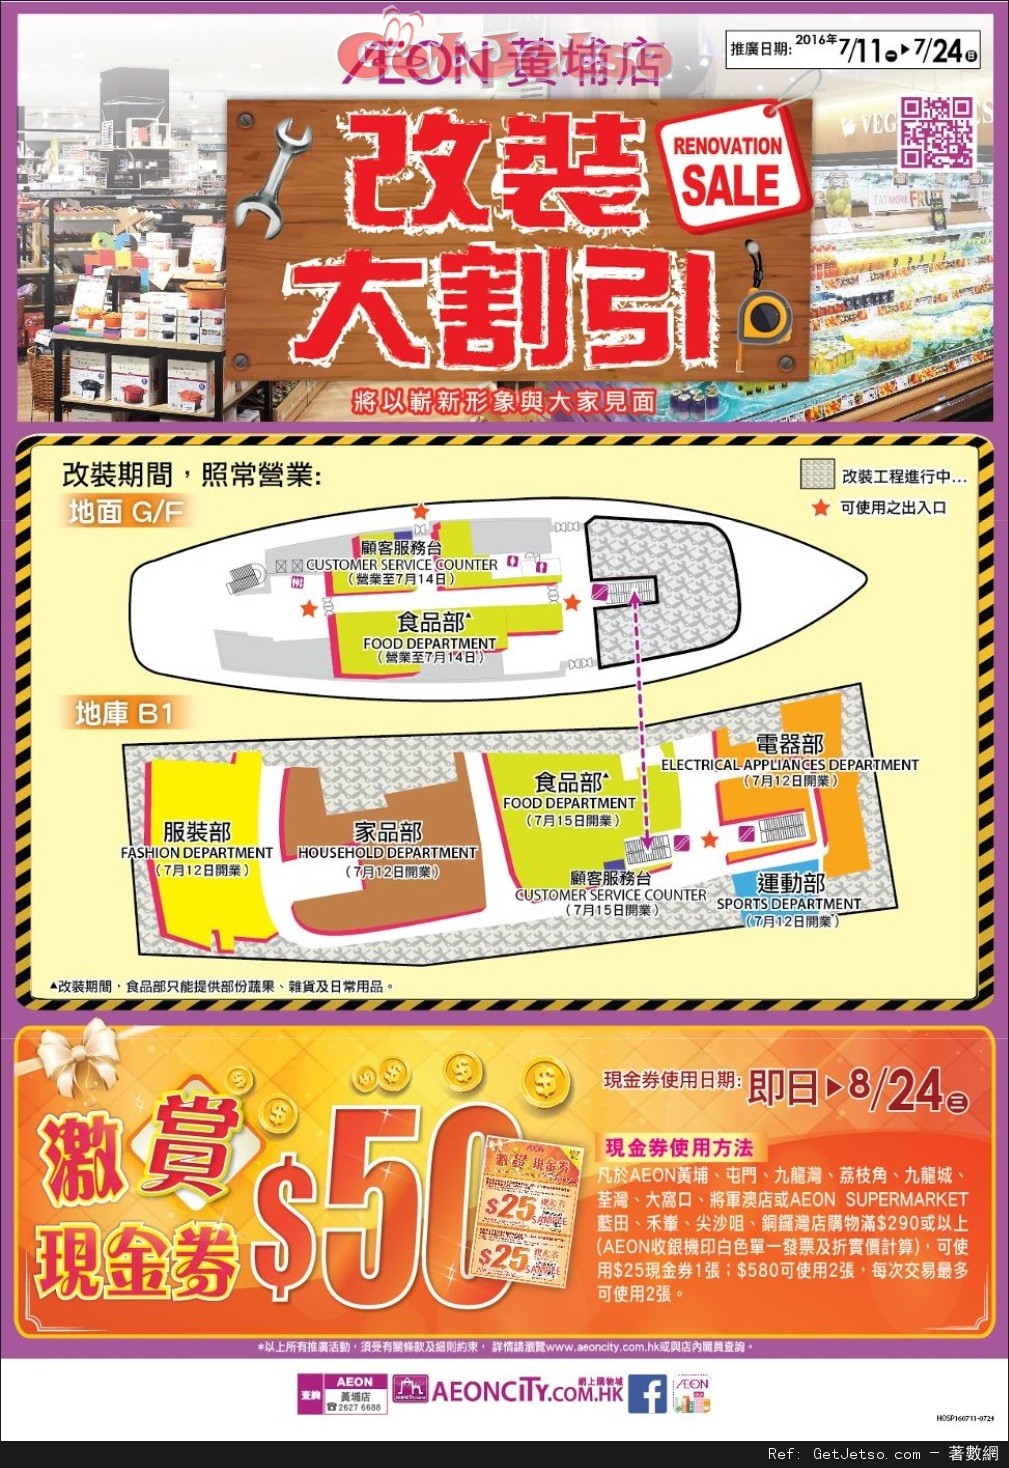 AEON 黃埔店改裝大割引購物優惠(至16年7月24日)圖片1